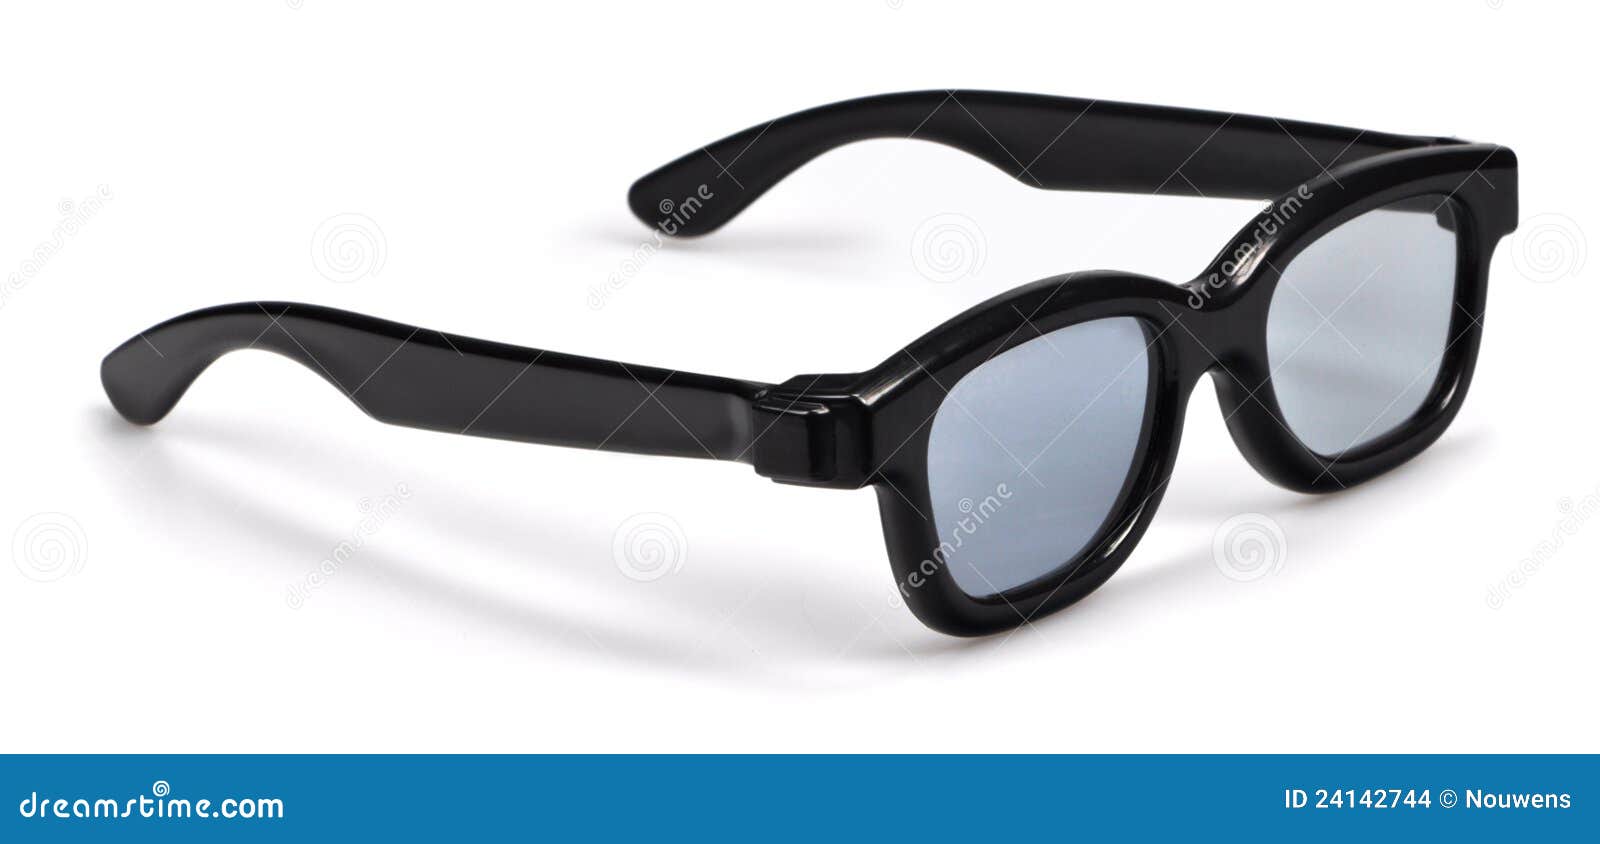 3D cinema glasses stock photo. Image of pair, real, dark - 24142744